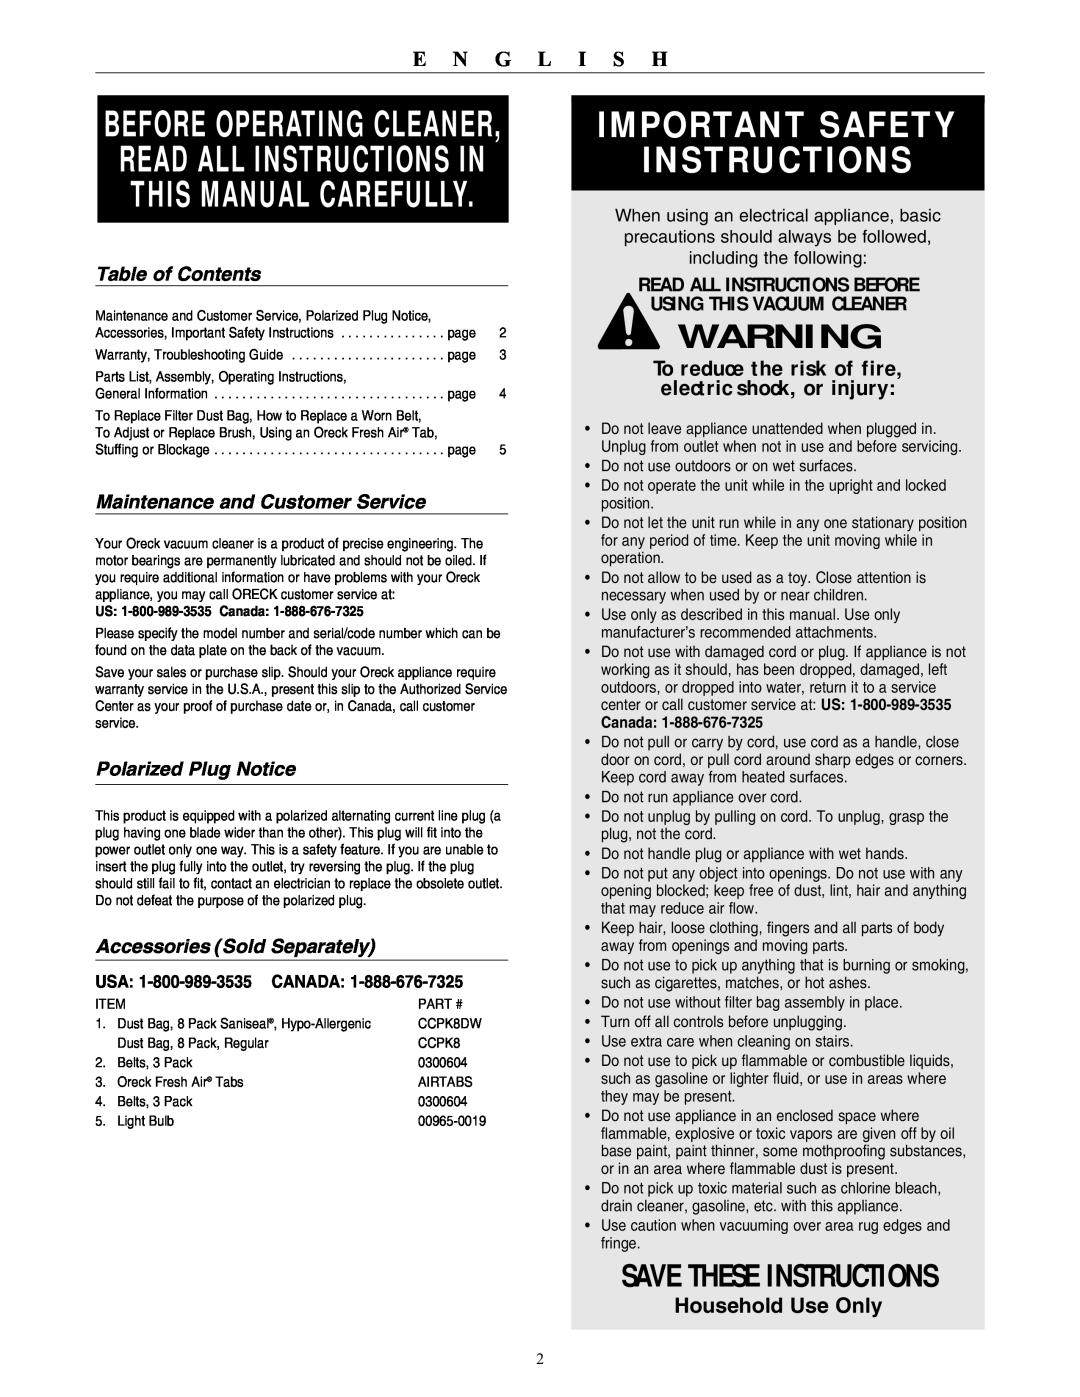 Oreck U2630HH warranty E N G L I S H, Table of Contents, Maintenance and Customer Service, Polarized Plug Notice, Canada 